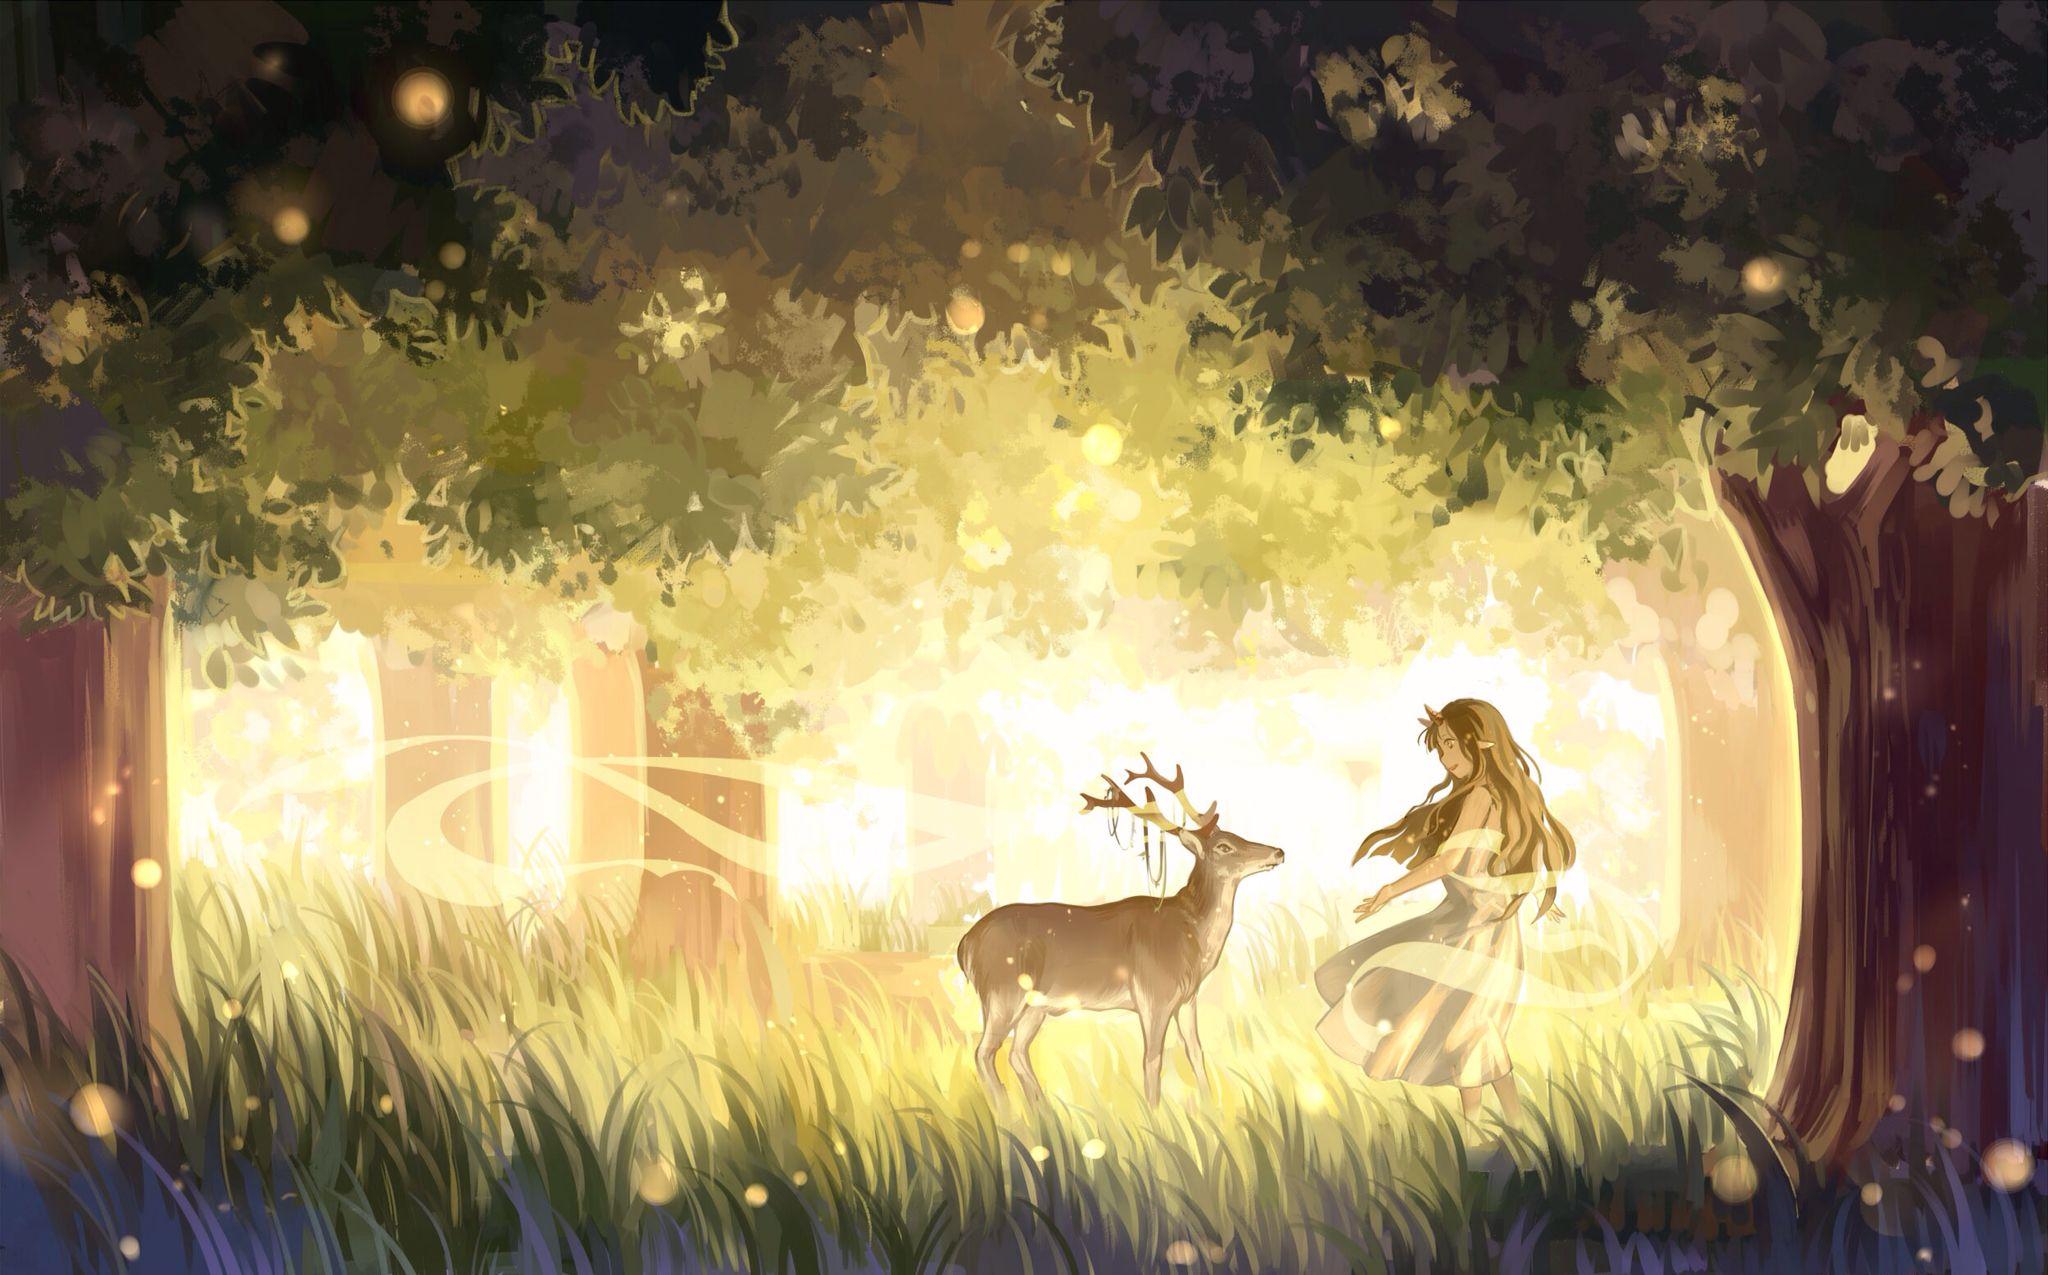 Manga Anime Wood Enchanted Forest Fantasy Deer